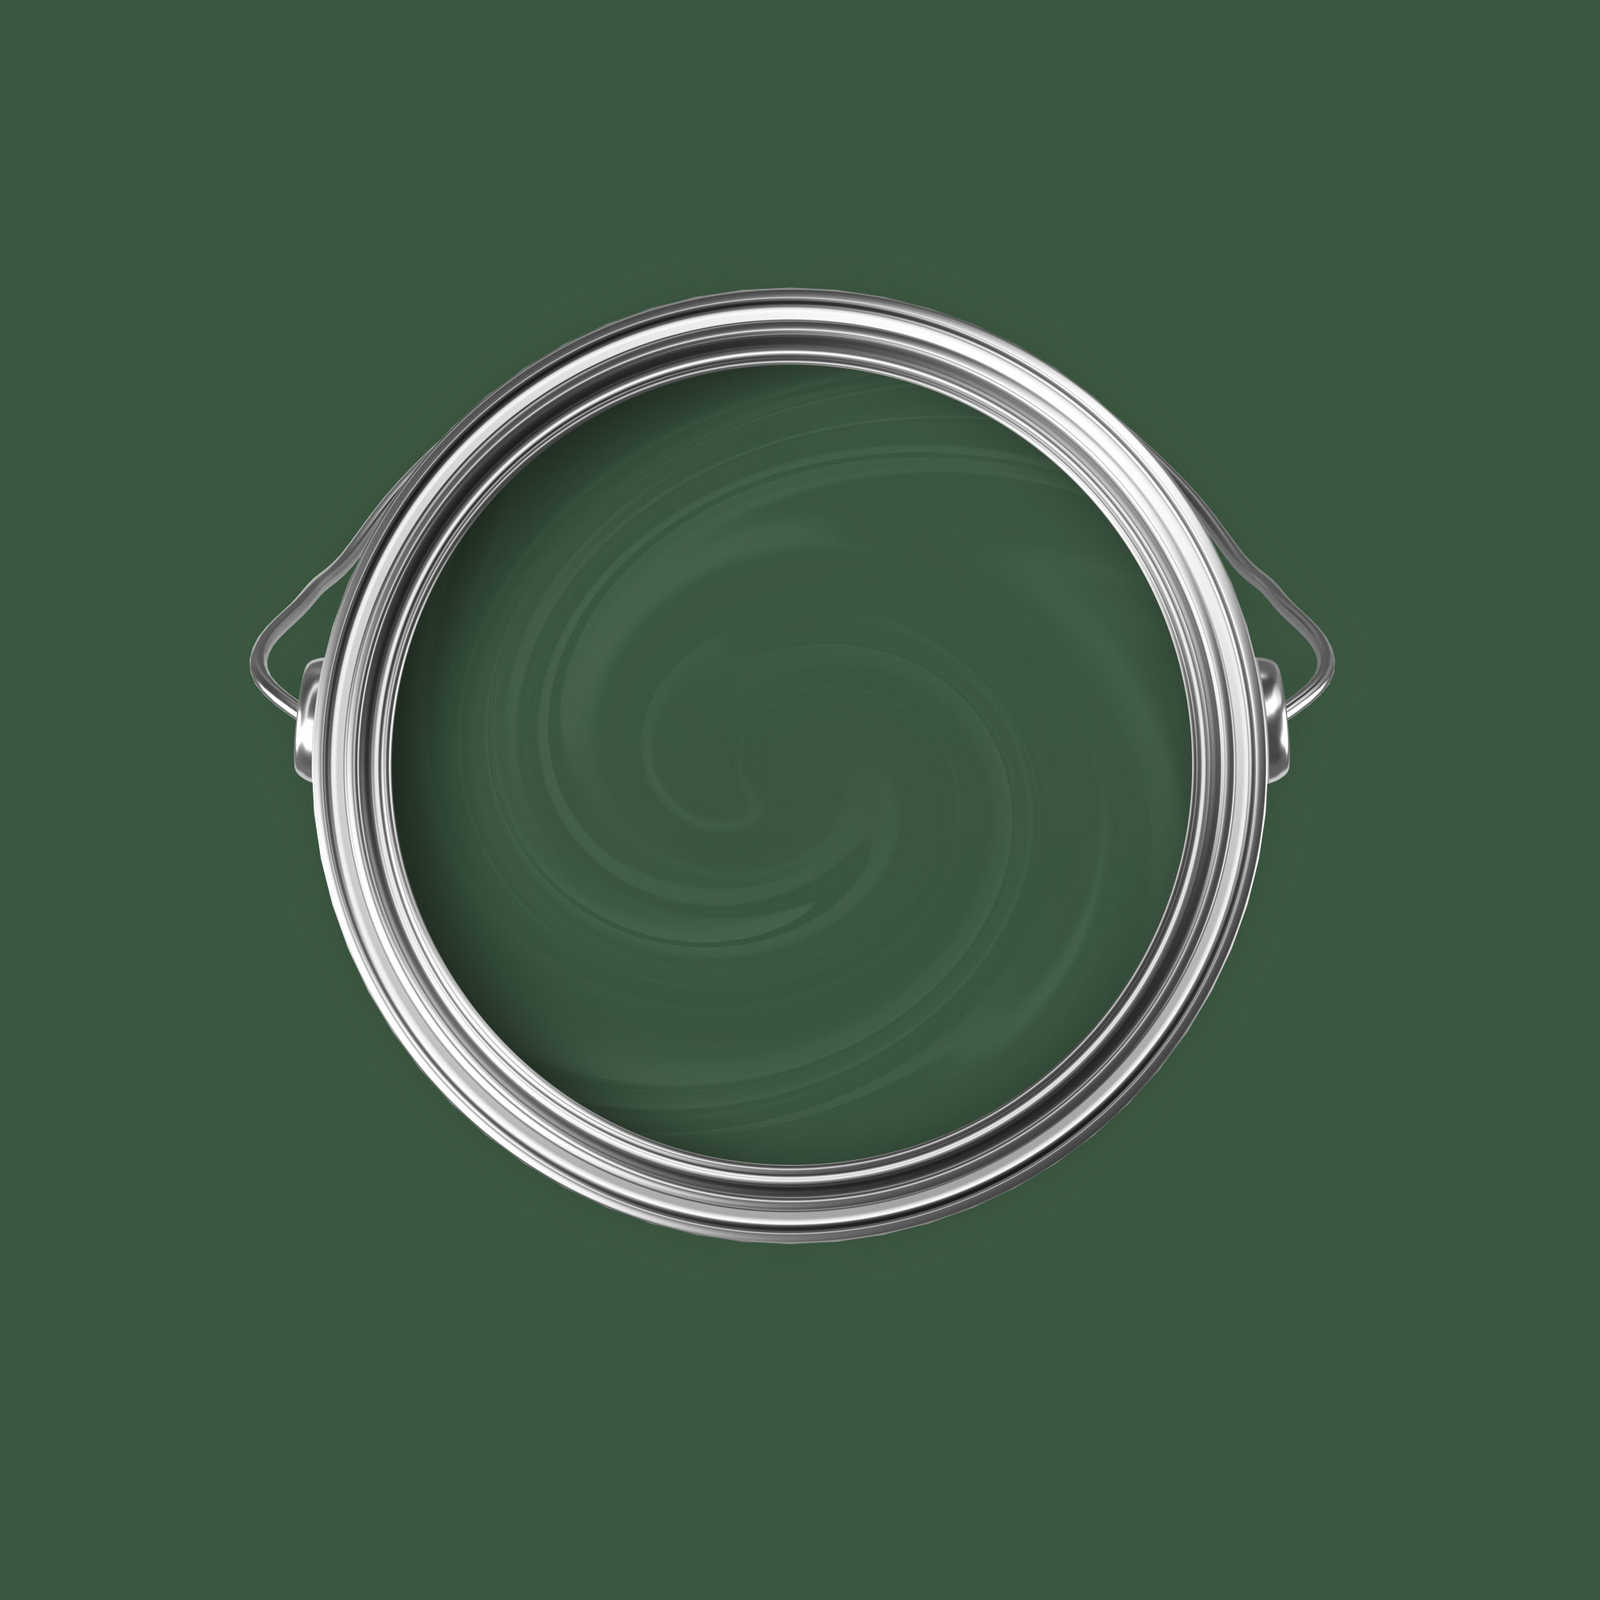             Peinture murale Premium vert mousse intense »Gorgeous Green« NW505 – 5 litres
        